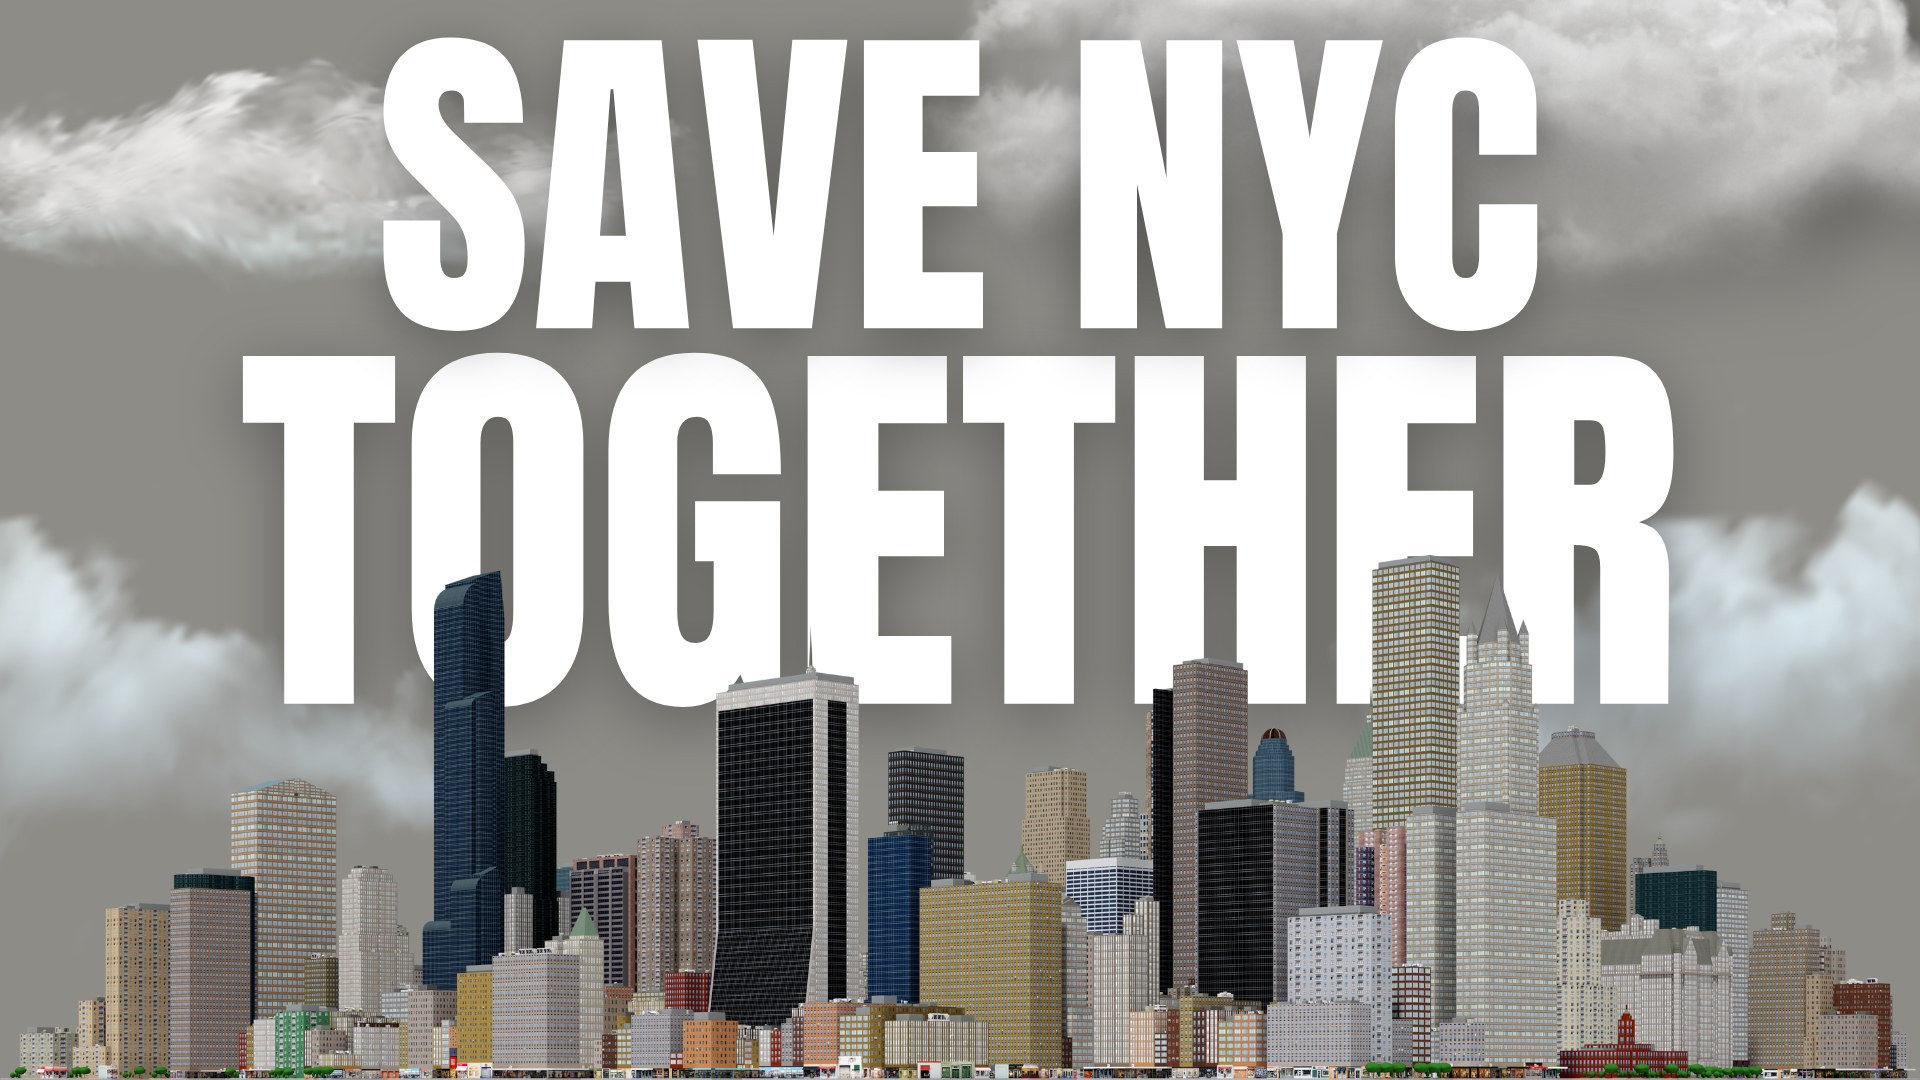 Save NYC Together